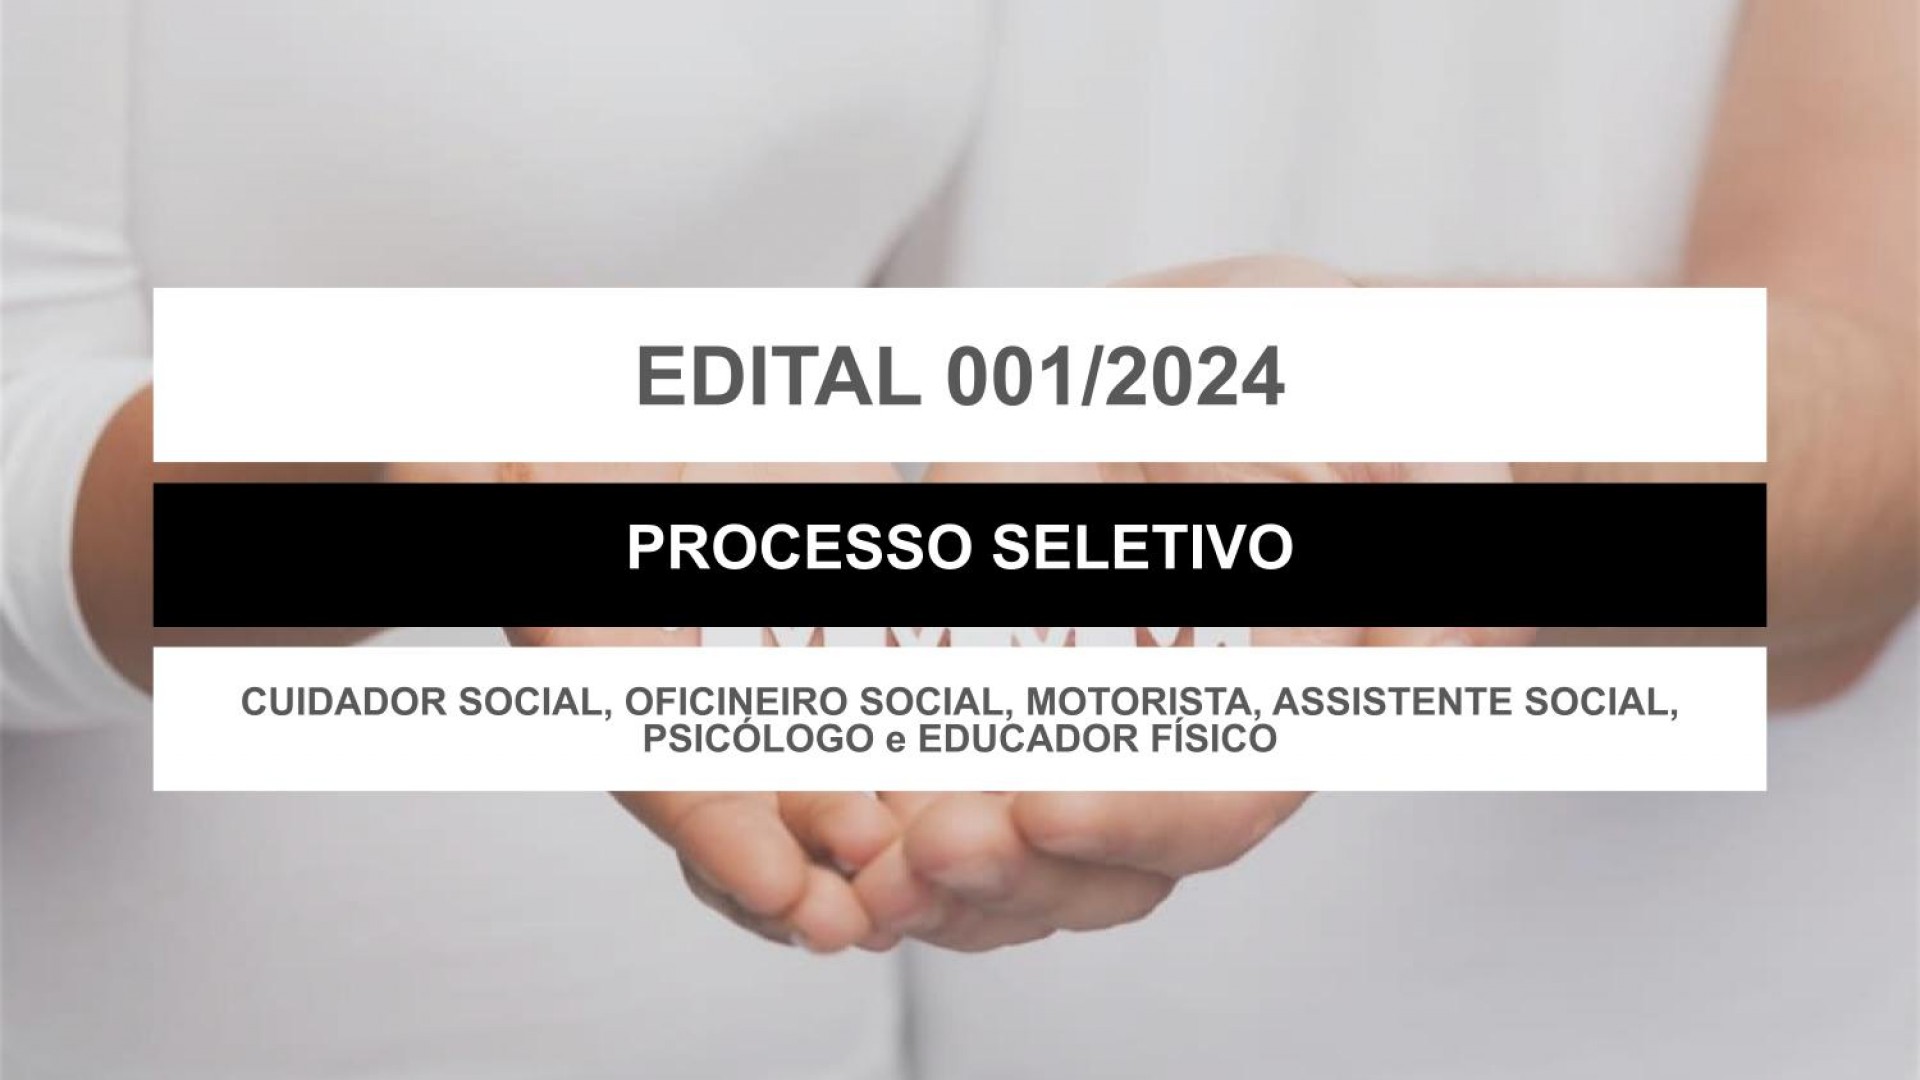 EDITAL ASSISTÊNCIA SOCIAL Nº 001/2024 - PROCESSO SELETIVO PÚBLICO SIMPLIFICADO